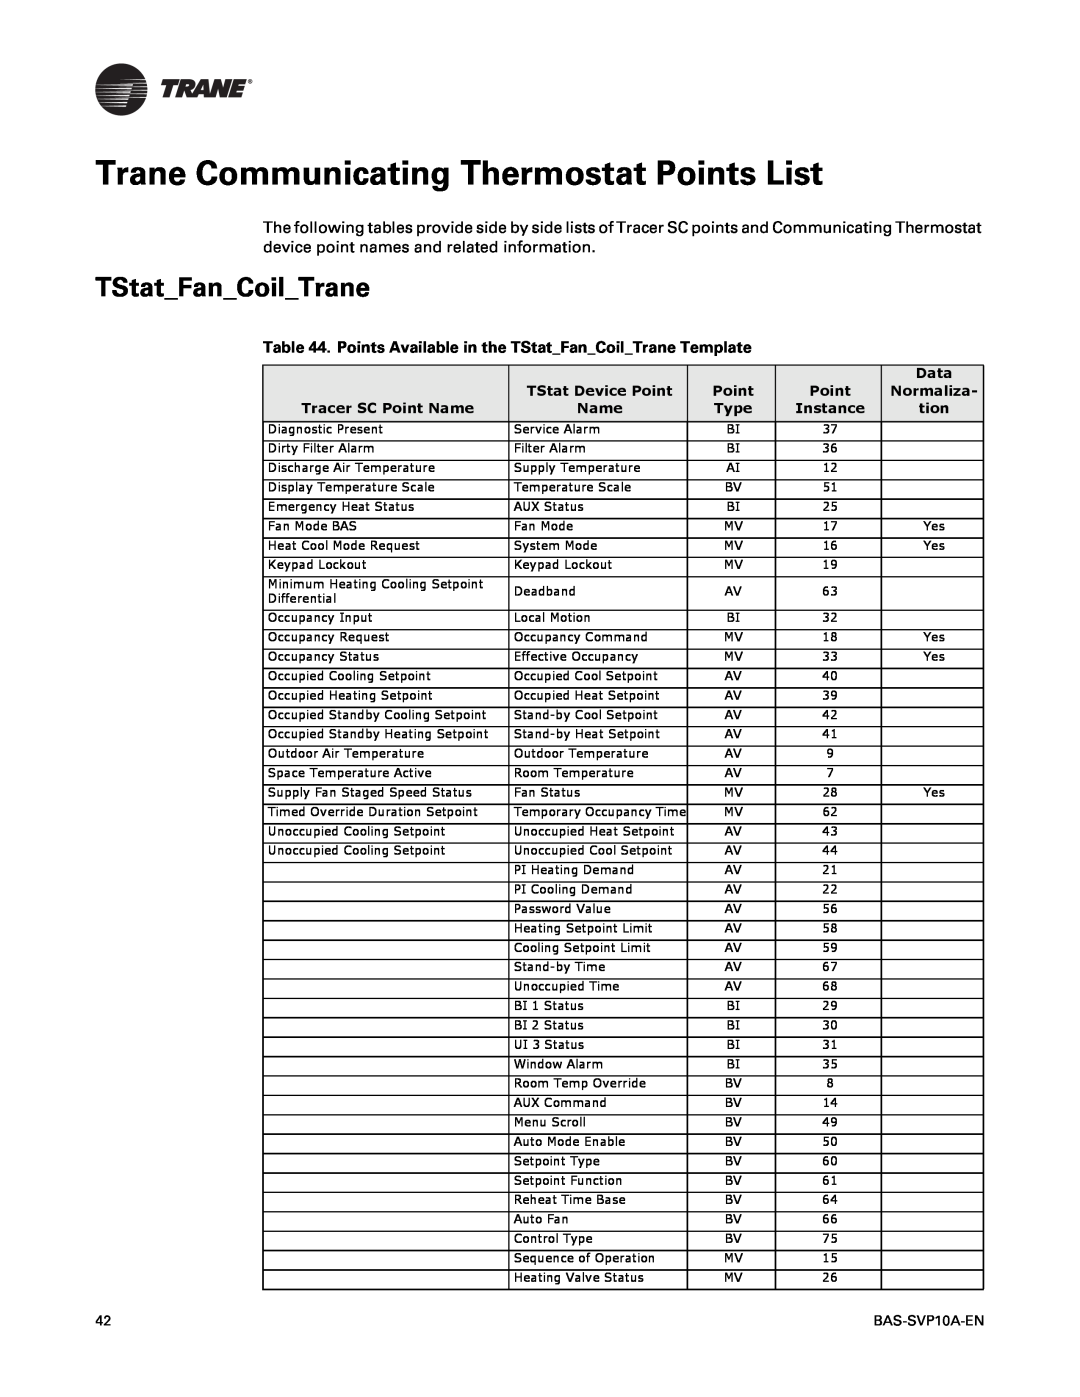 Trane BAS-SVP10A-EN manual Trane Communicating Thermostat Points List, TStatFanCoilTrane, TStat Device Point, Name 